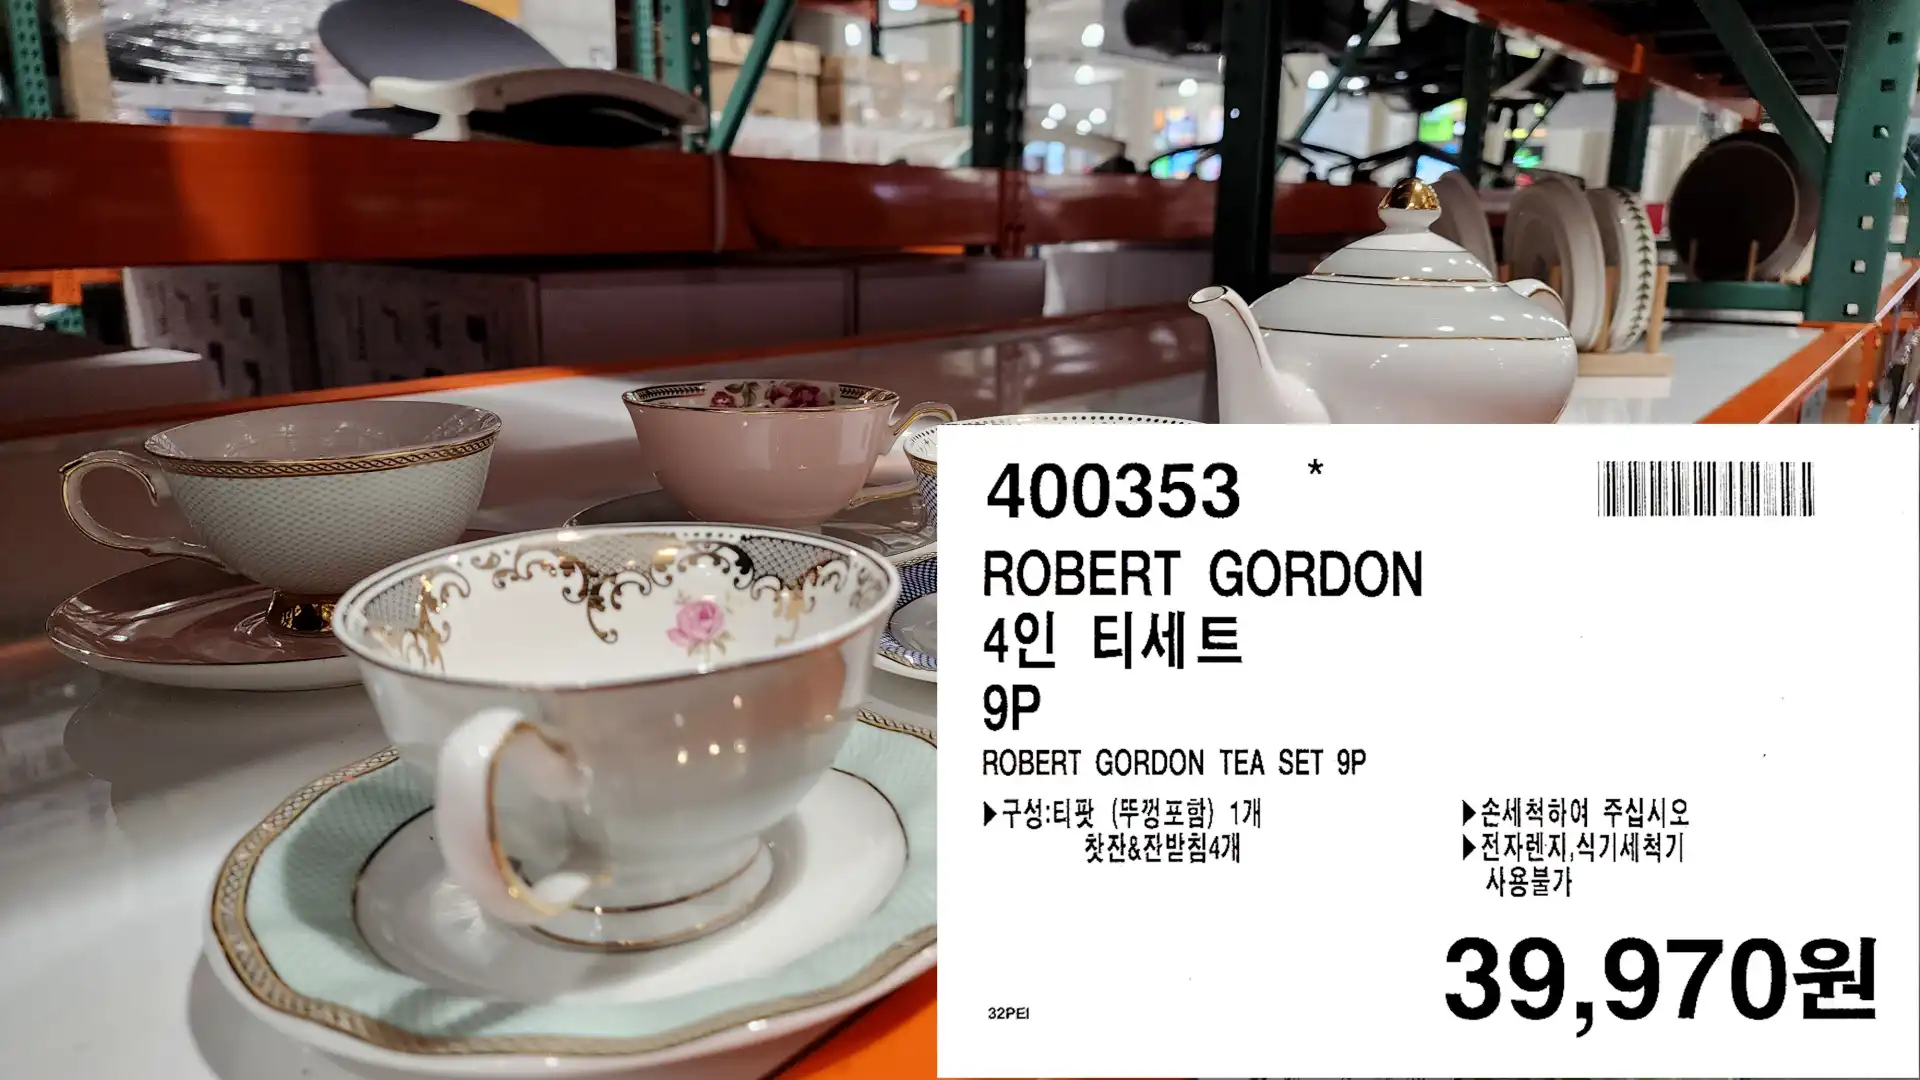 ROBERT GORDON
4인 티세트
9P
ROBERT GORDON TEA SET 9P
▶구성:티팟 (뚜껑포함) 1개
찻잔&잔받침4개
▶손세척하여 주십시오
▶전자렌지,식기세척기
사용불가
39,970원